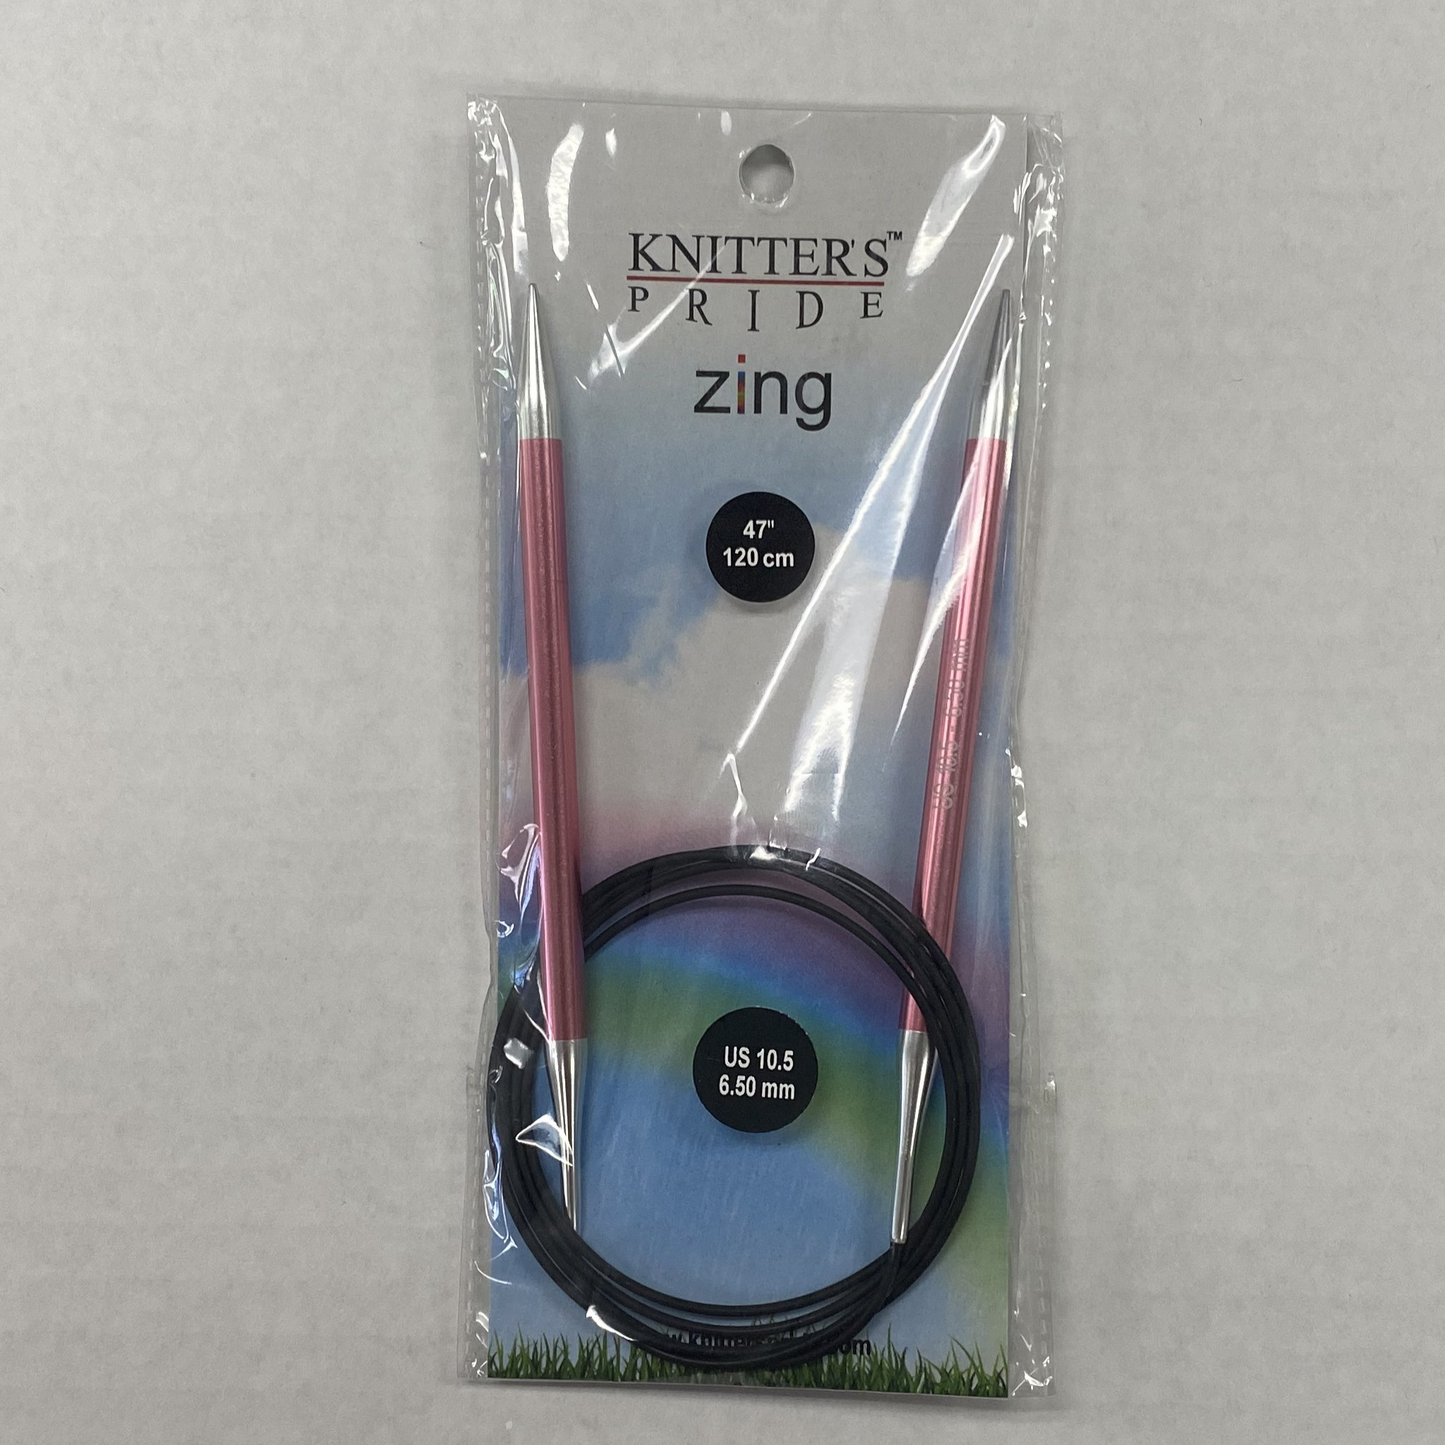 Knitter's Pride - Zing - US 10.5 / 6.50mm Fixed Circular Needles